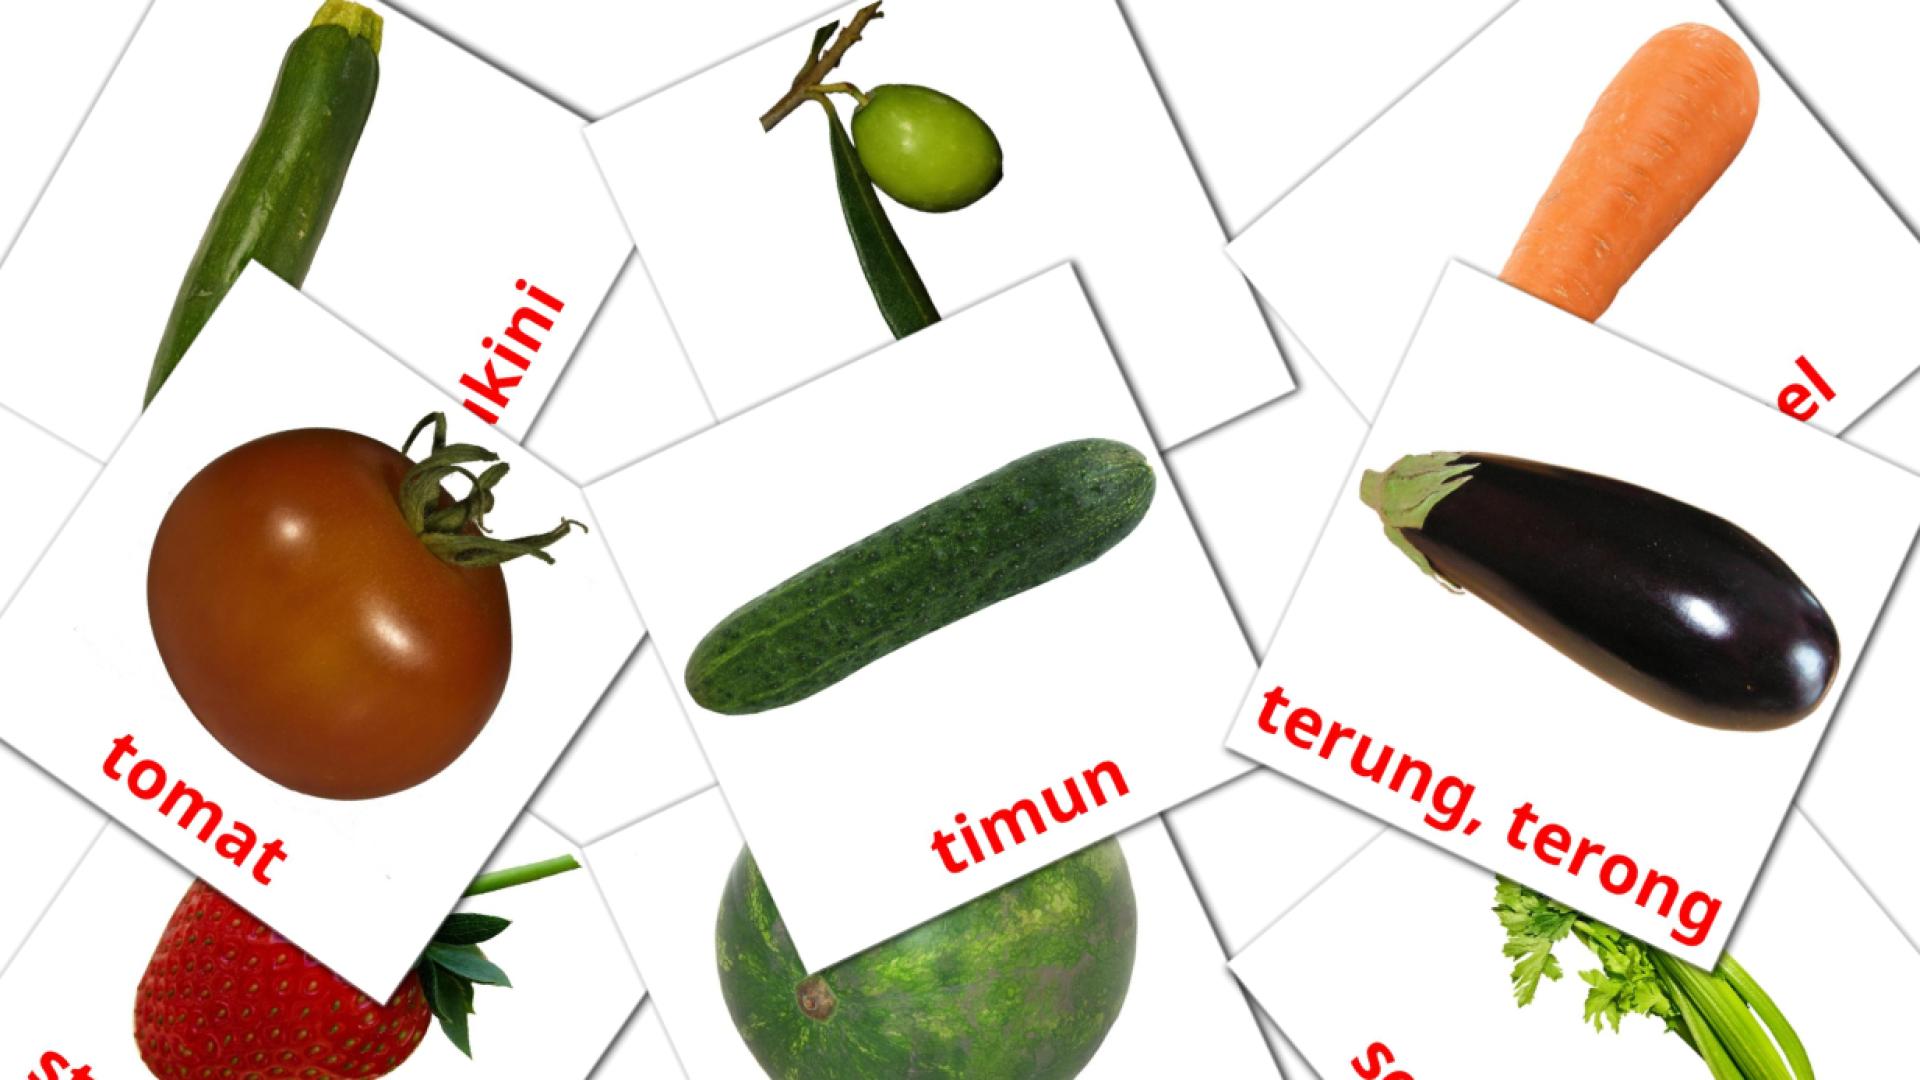 Buah - buahan indonesian vocabulary flashcards